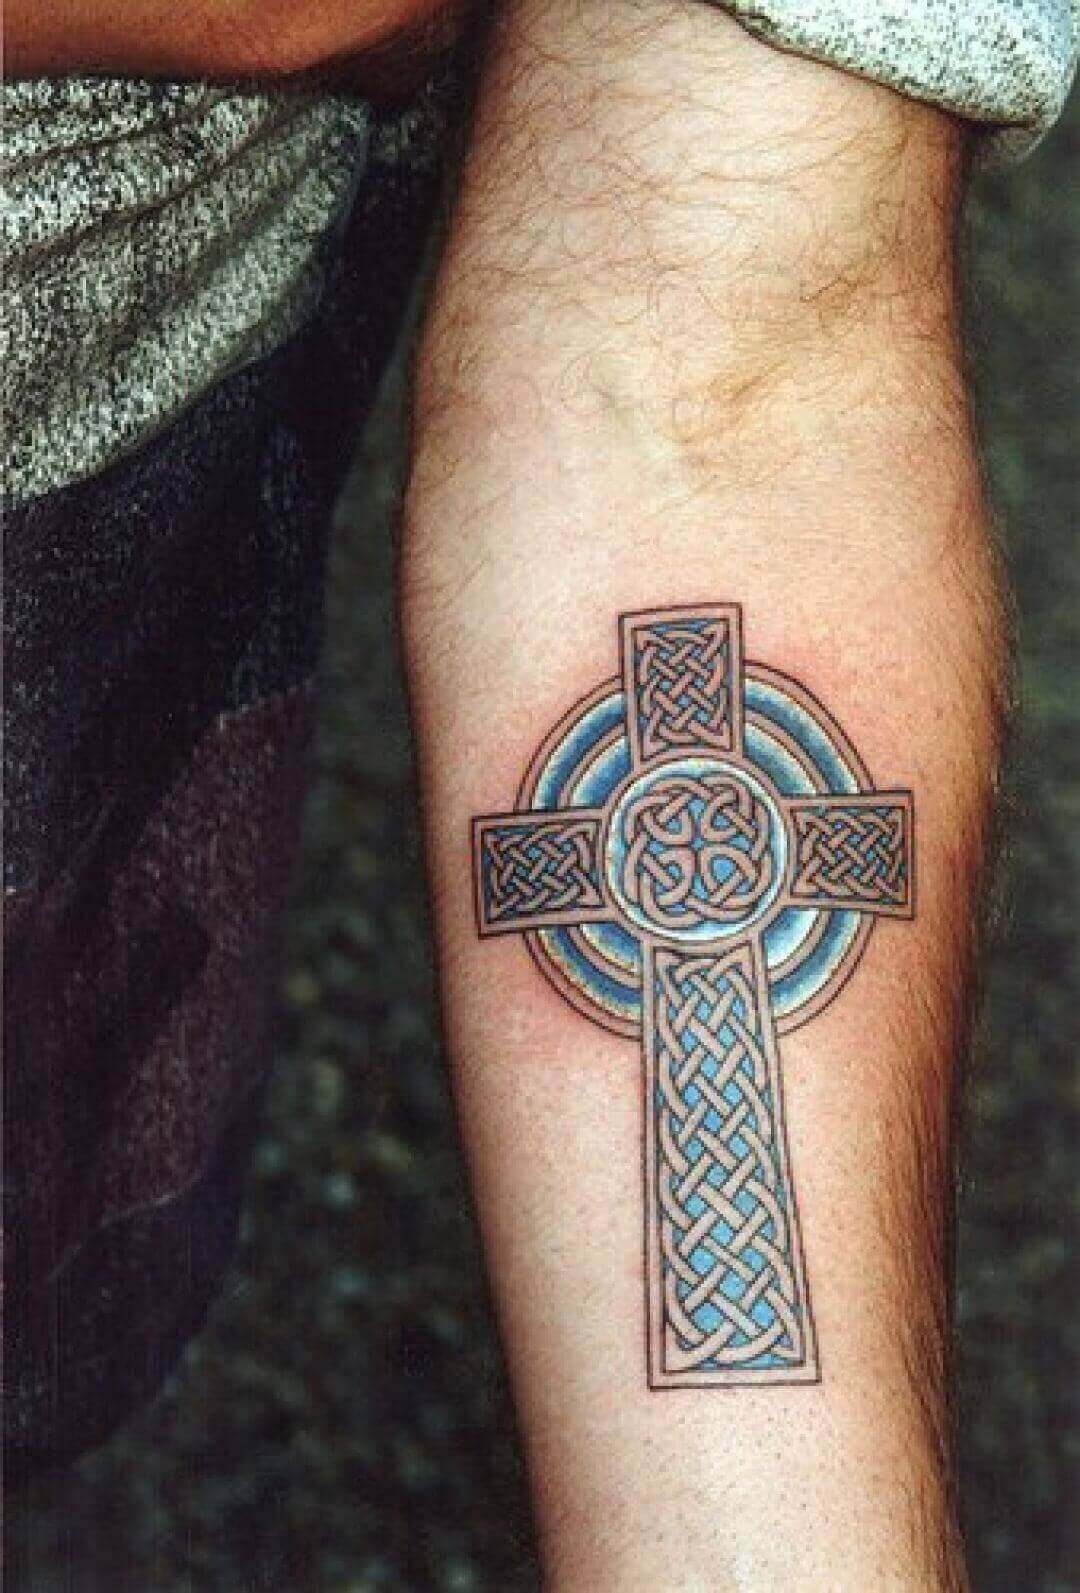 cross celtic tattoo